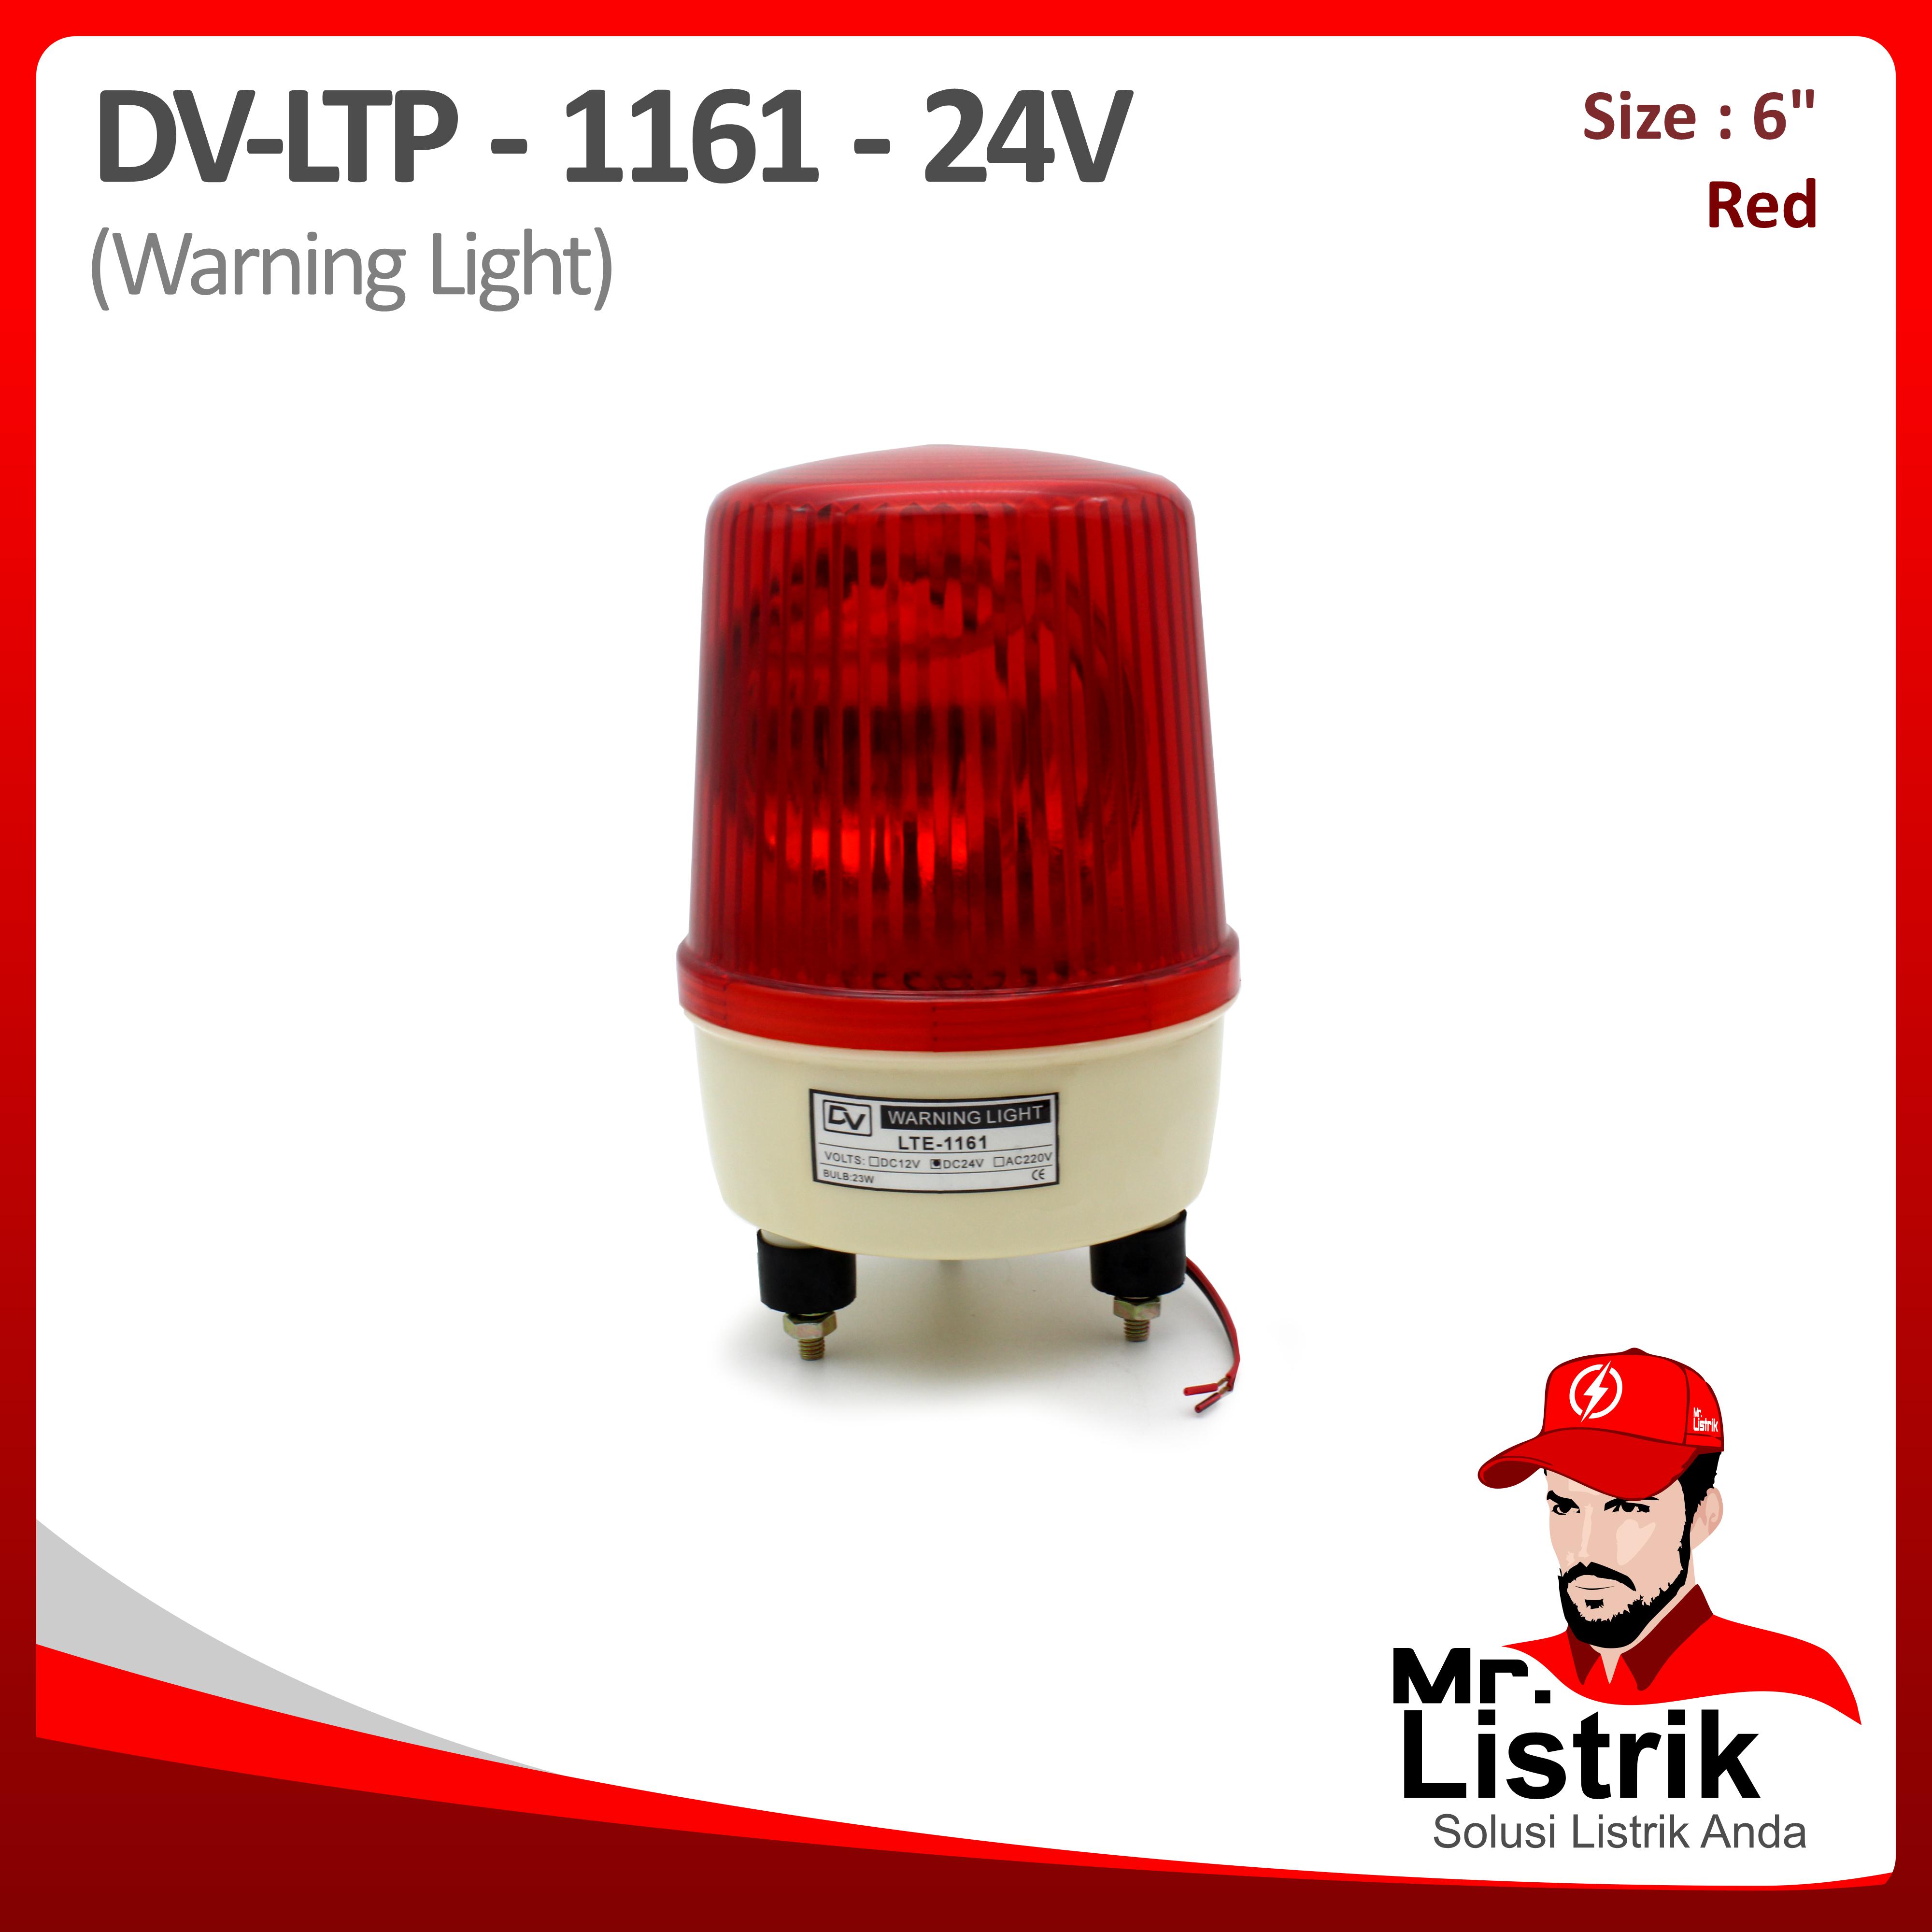 Warning Light PCB Rotary 6 Inch 24VDC DV LTP-1161